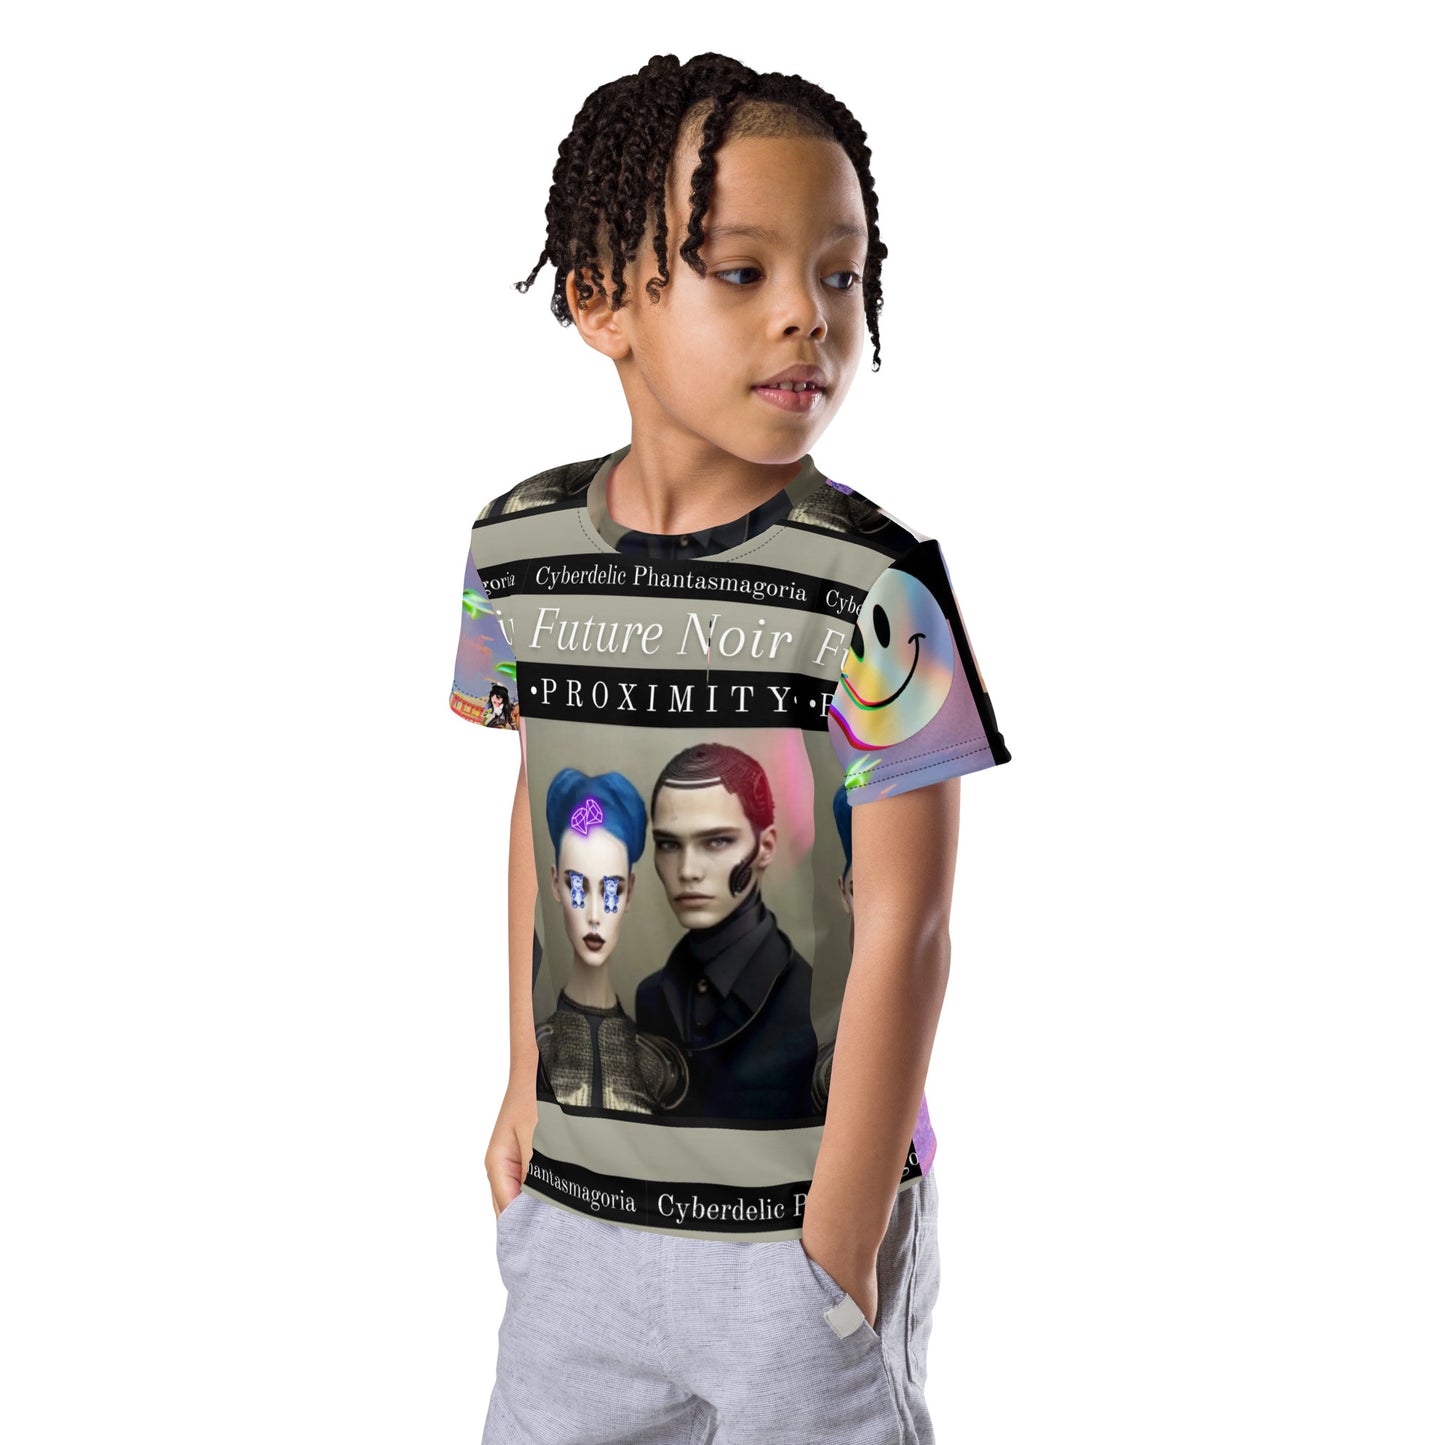 Love 2030 Kids crew neck t-shirt